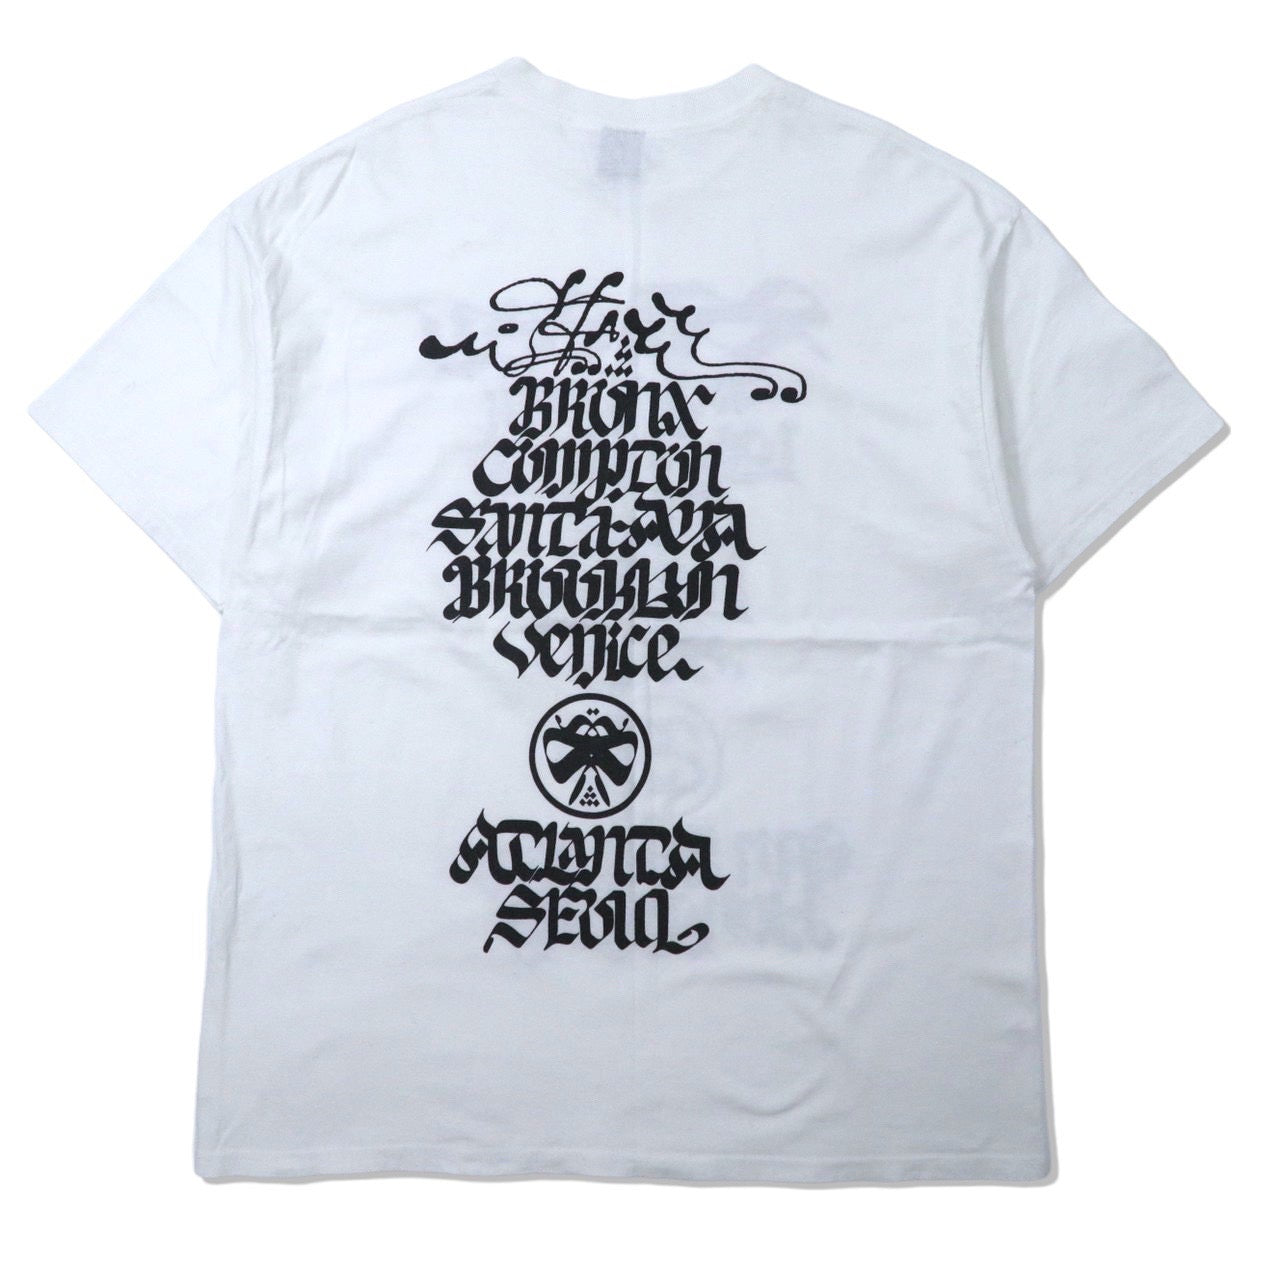 STUSSY Big Size Logo Tee T-Shirt XL White World Tour 2006 World Tour  GRAFFITI 41 Rostar Mexico Made